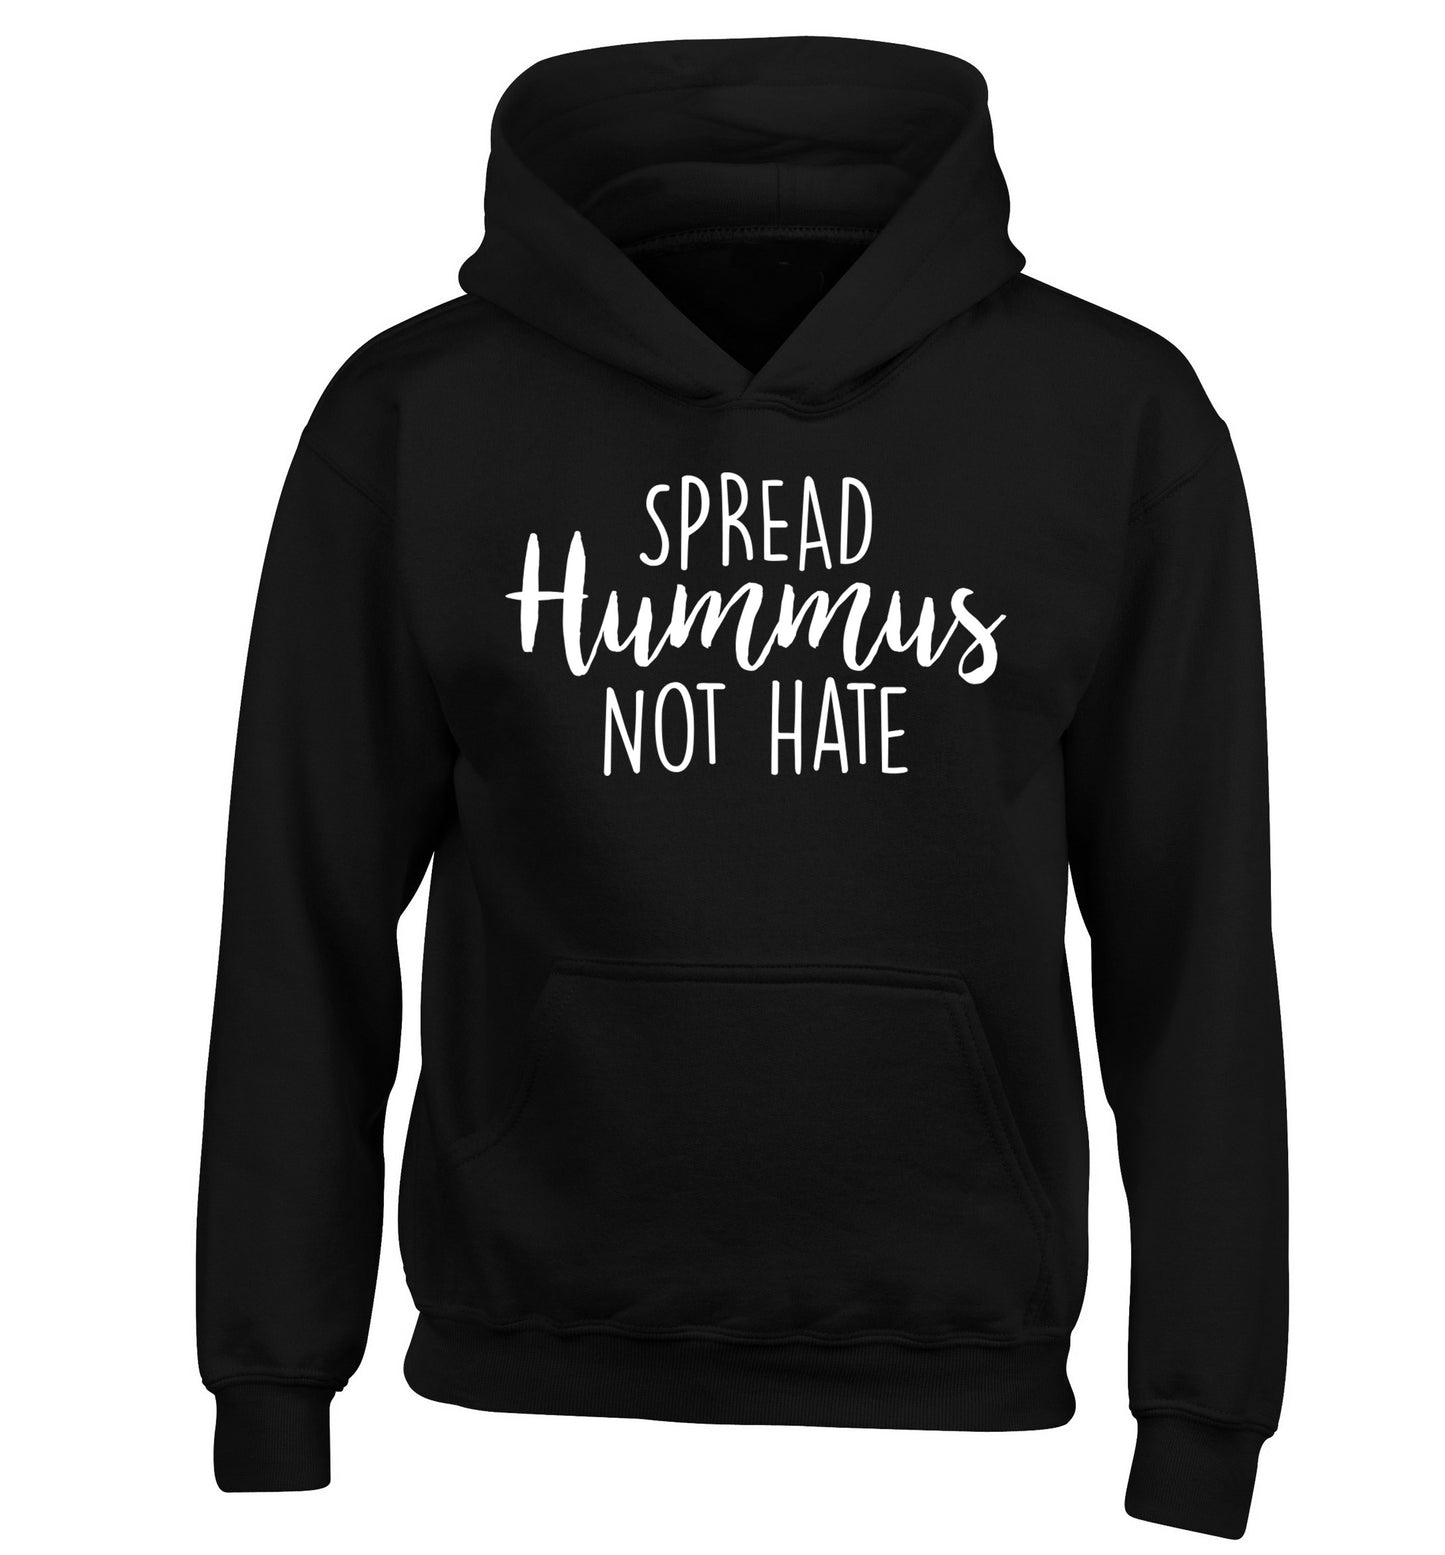 Spread hummus not hate script text children's black hoodie 12-14 Years